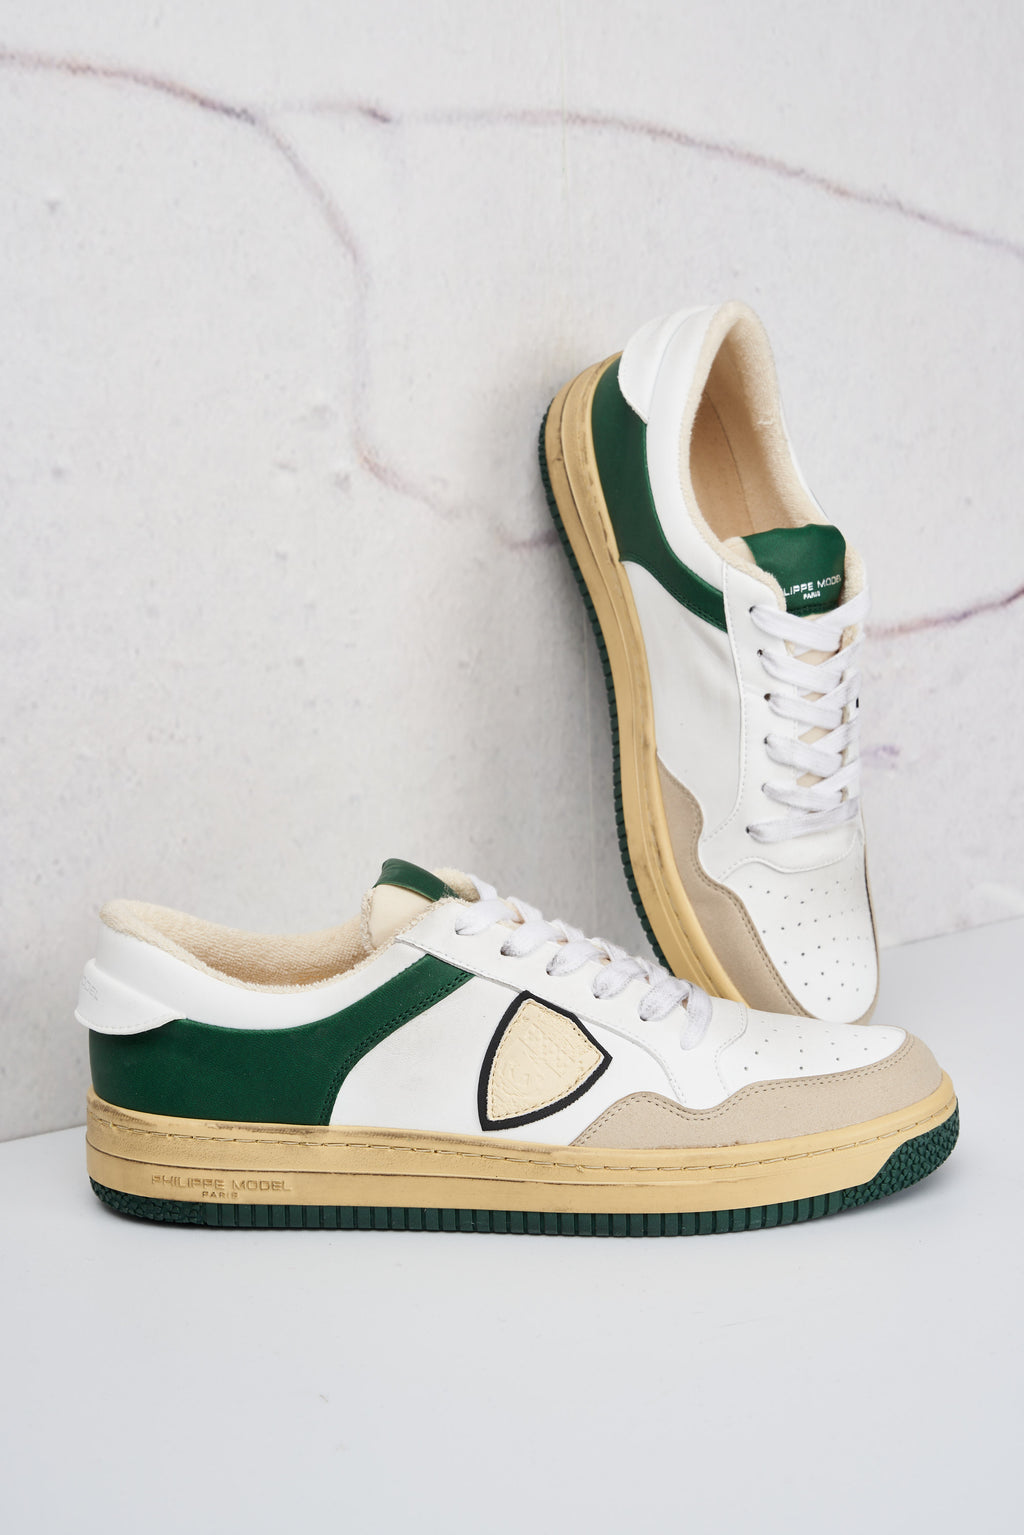 Philippe Model ACBC Sneakers Lyon Pelle e Suede Colore Bianco Verde